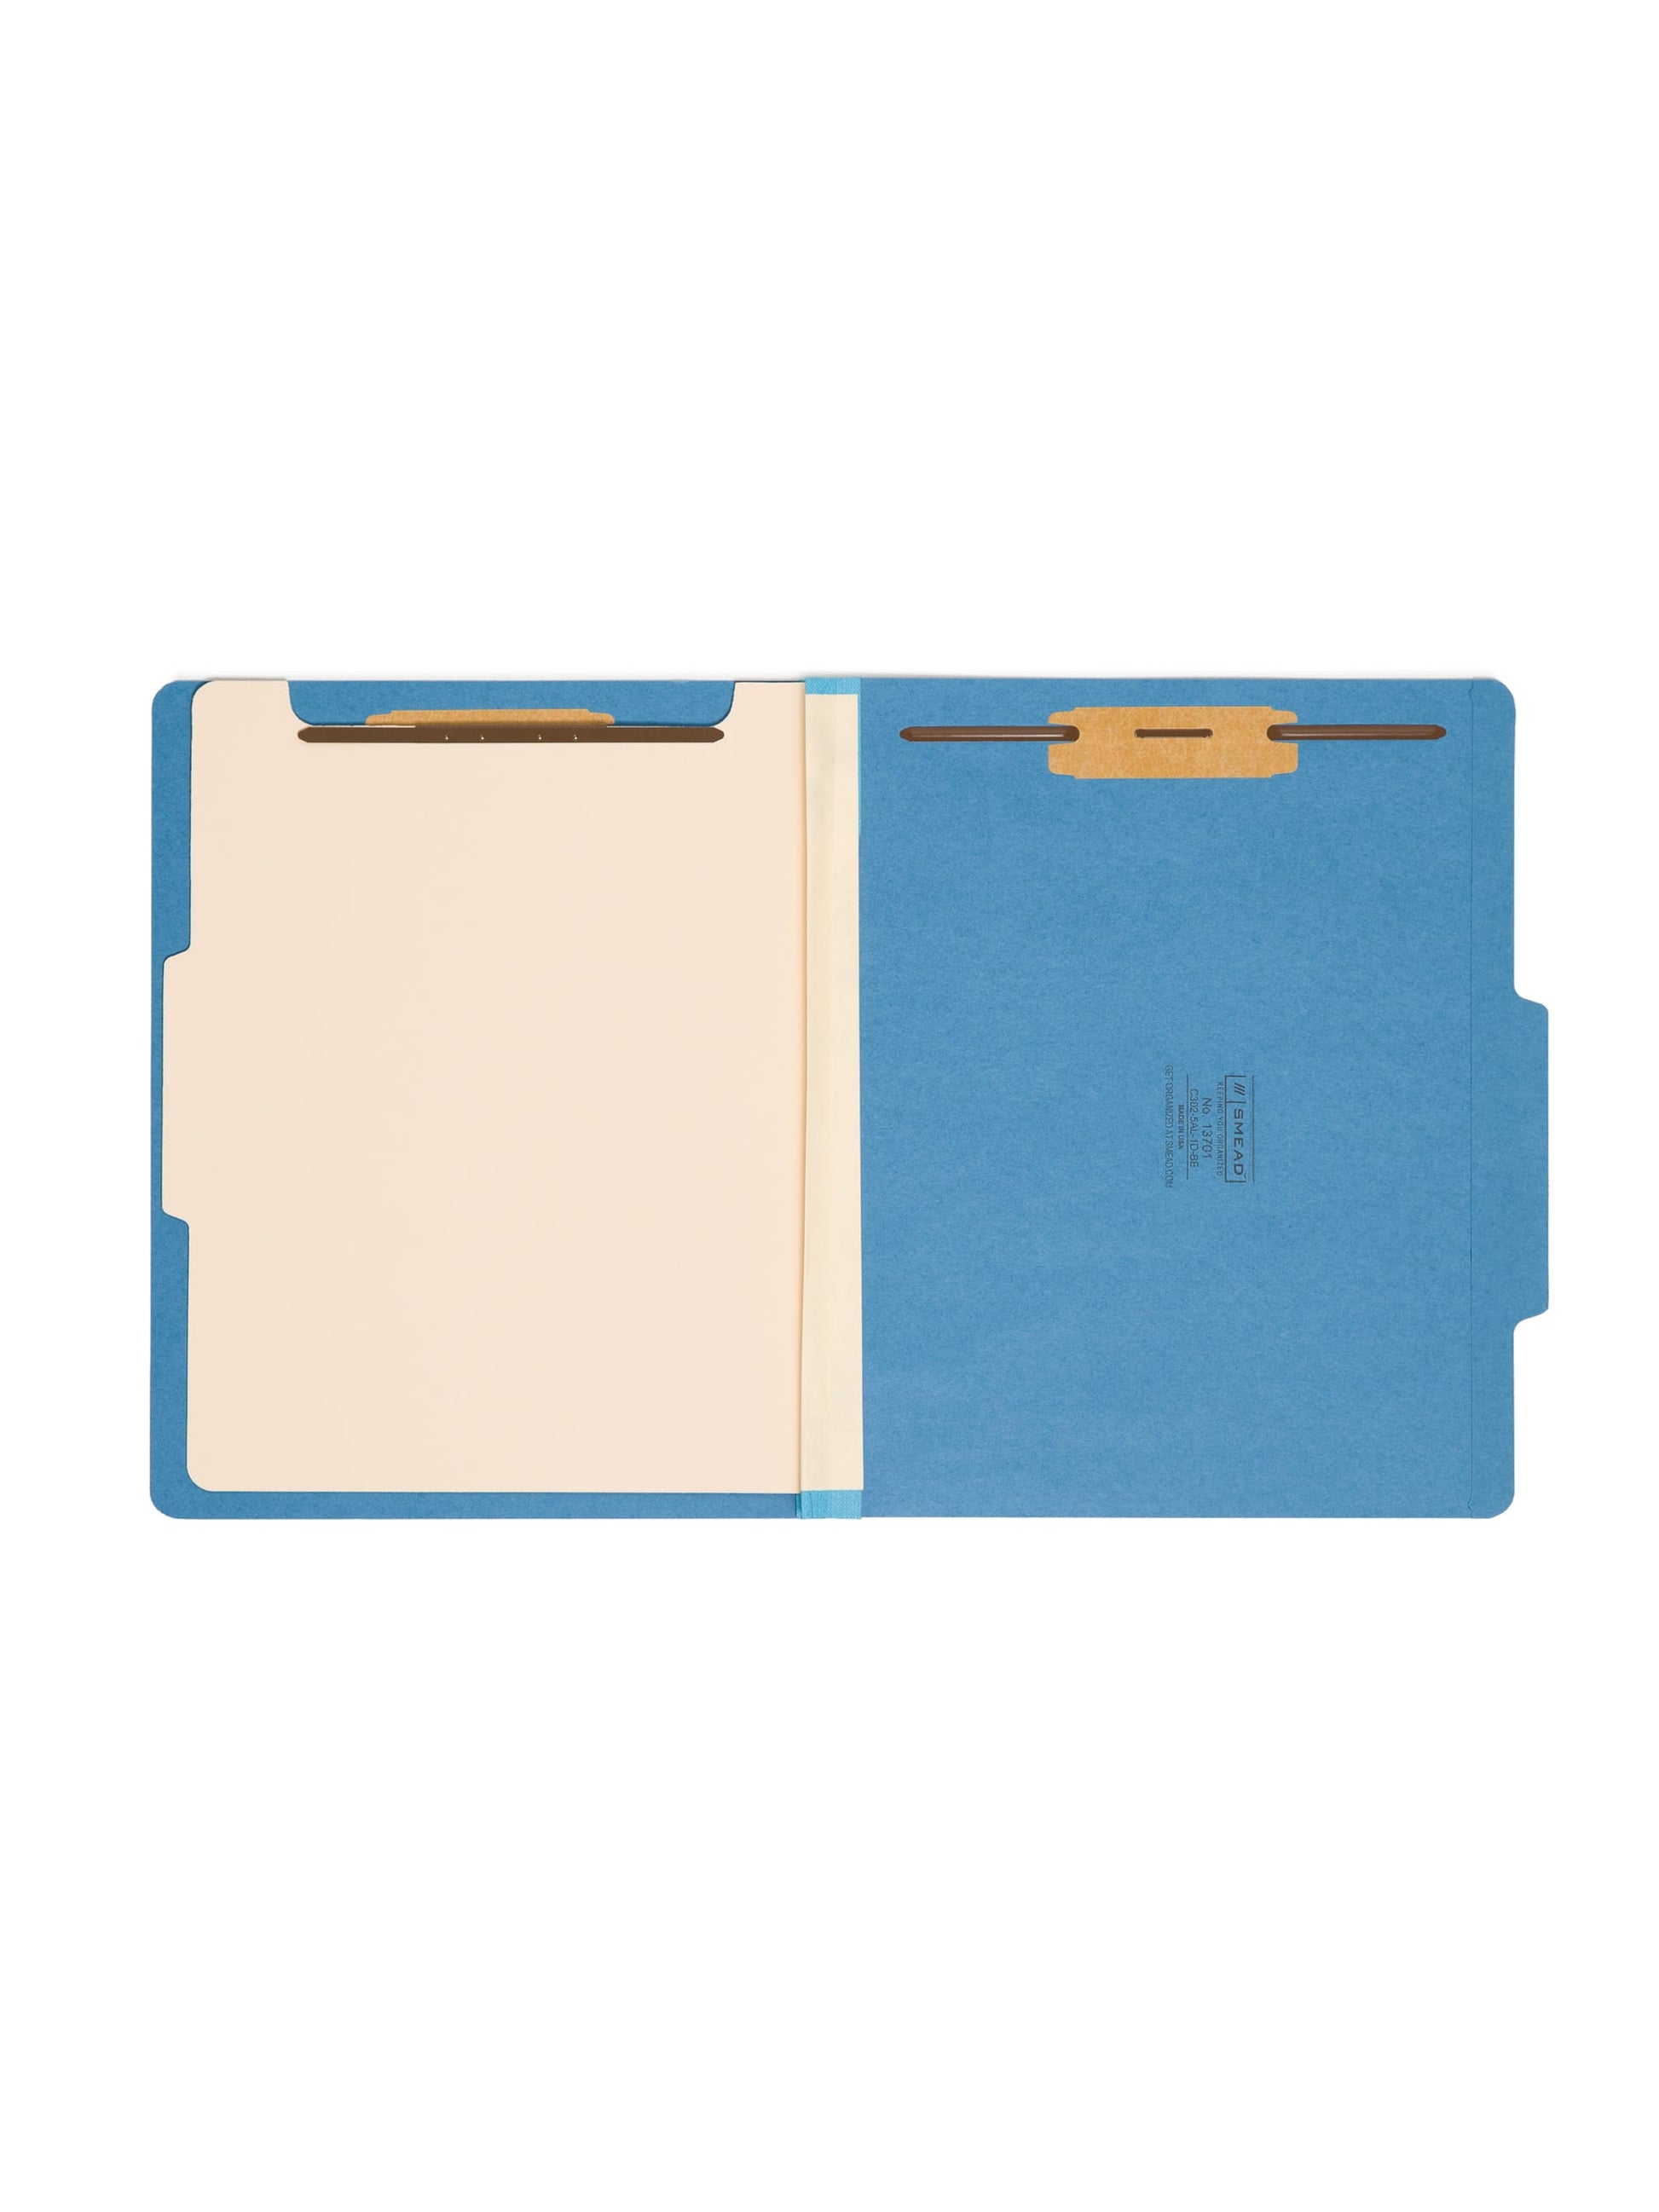 Classification File Folders, 1 Divider, 2 inch Expansion, Blue Color, Letter Size, Set of 0, 30086486137011